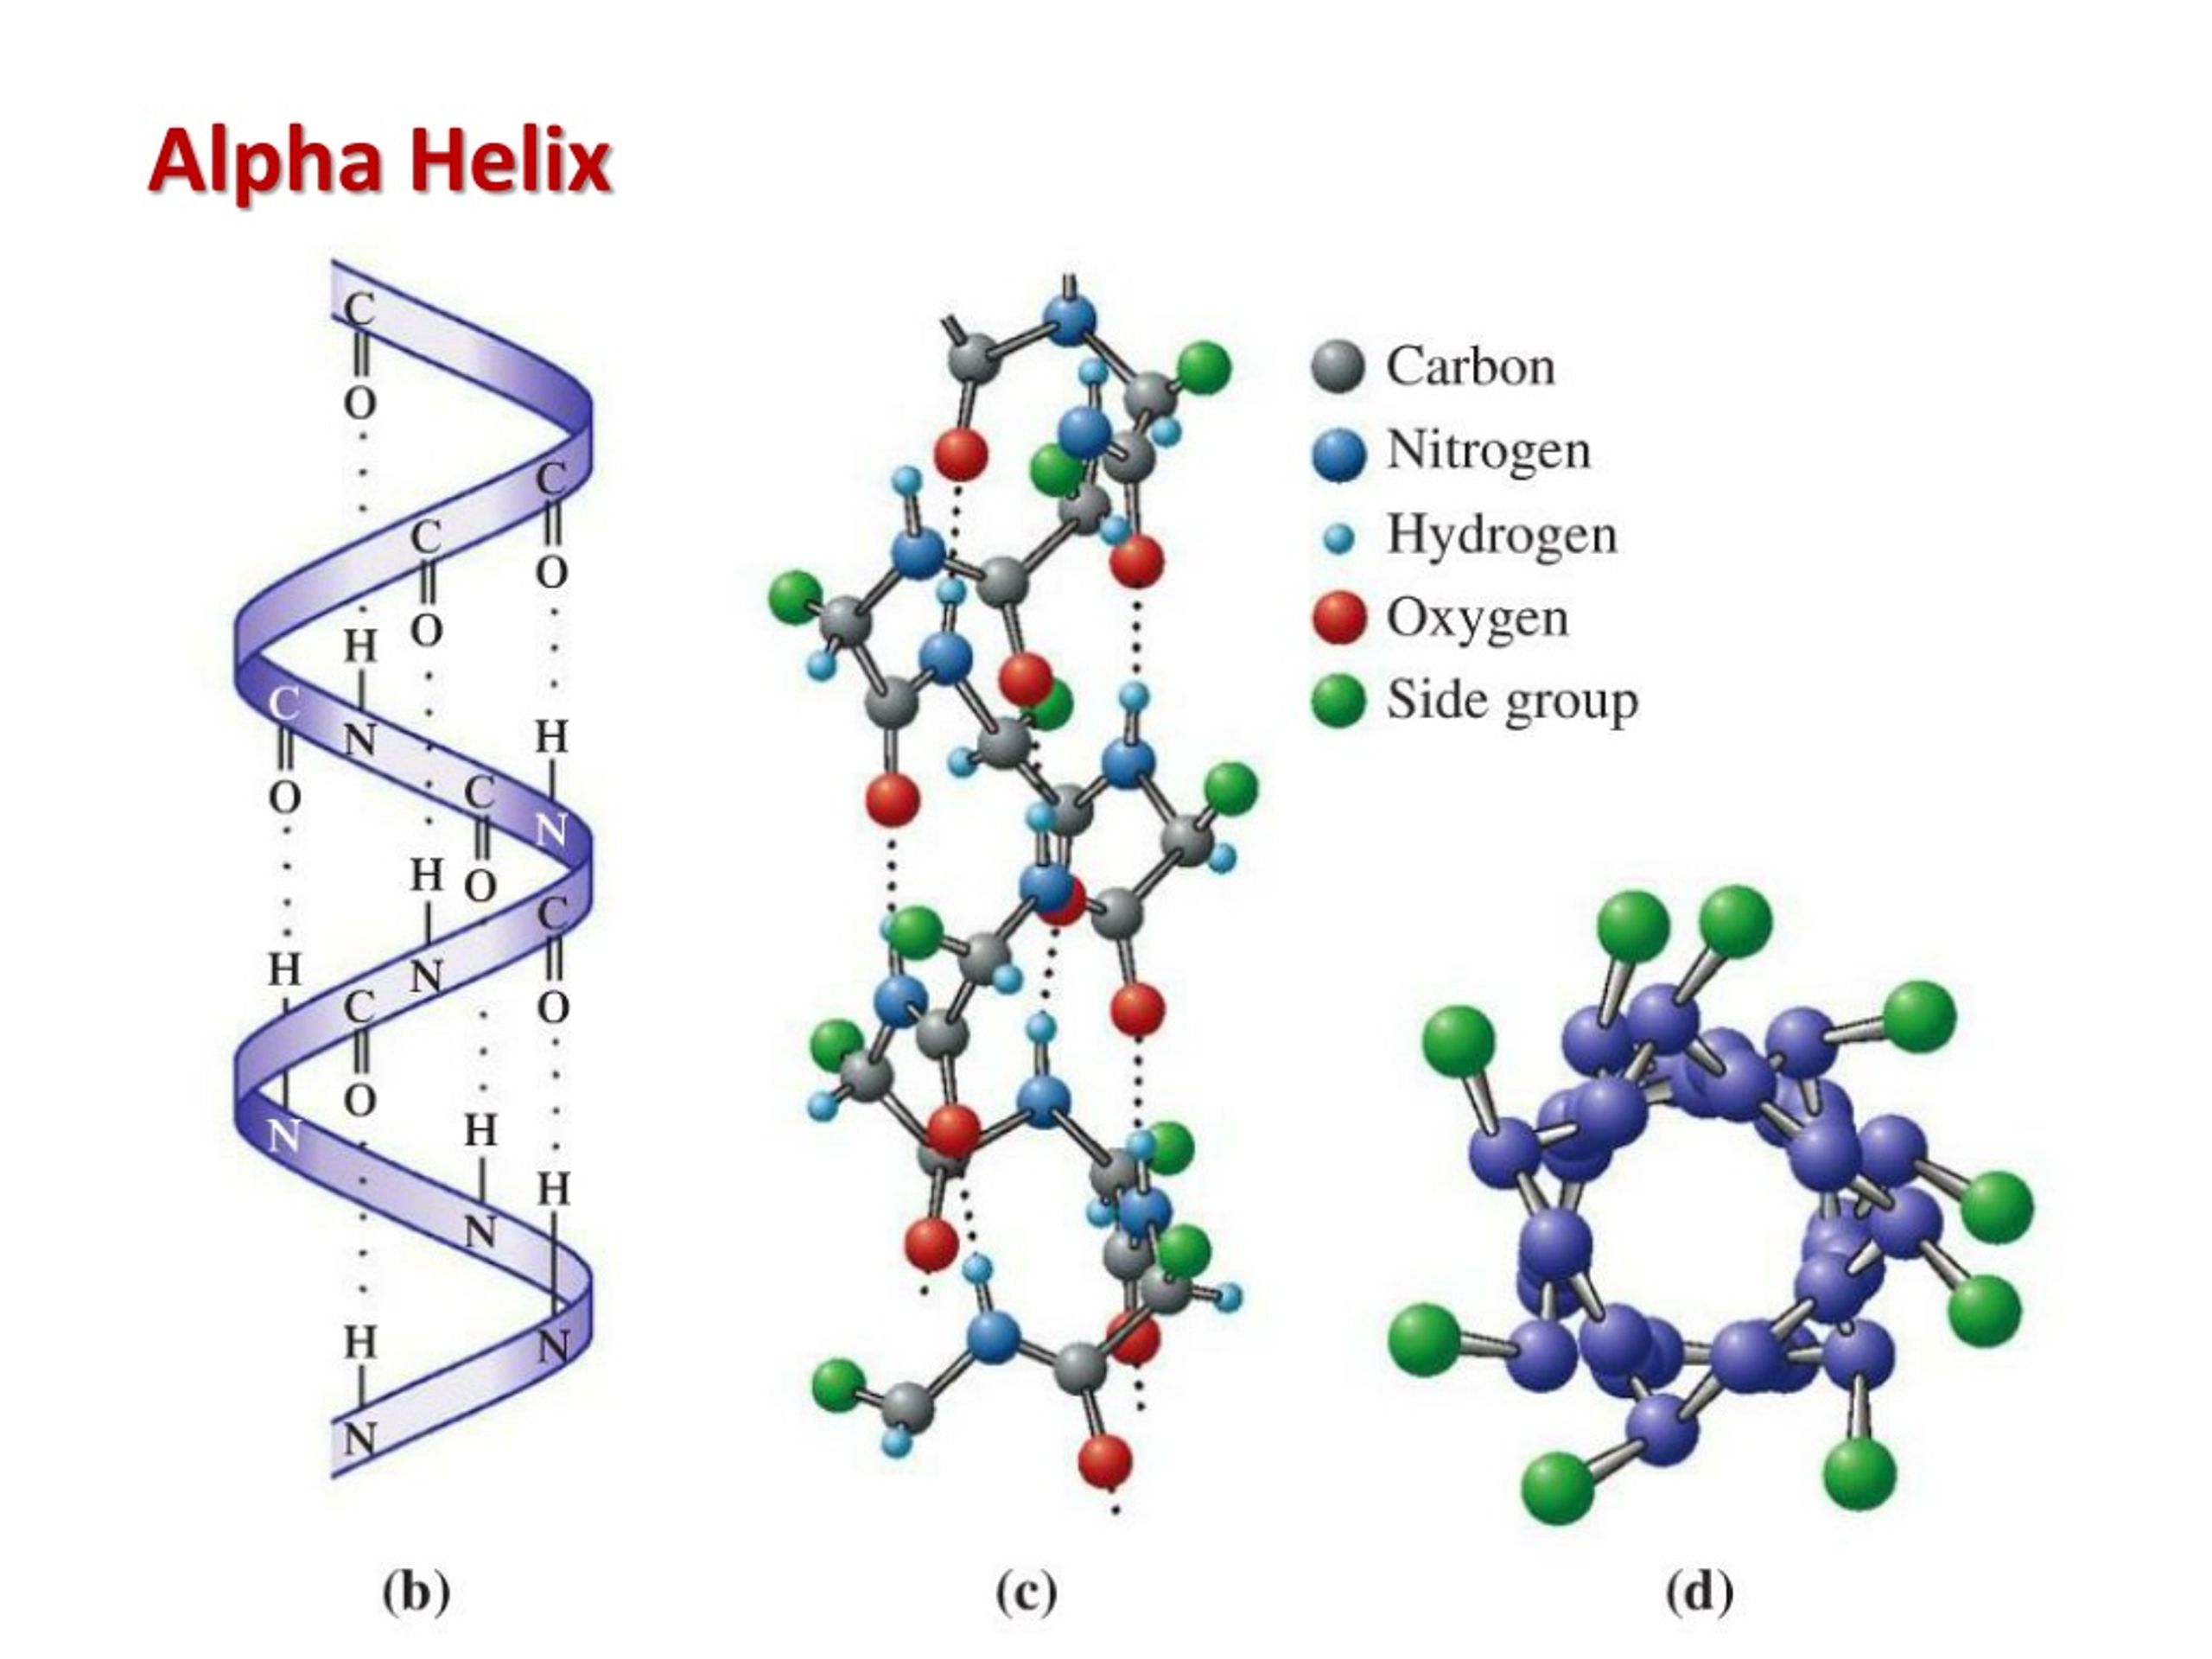 alpha helix and beta sheet